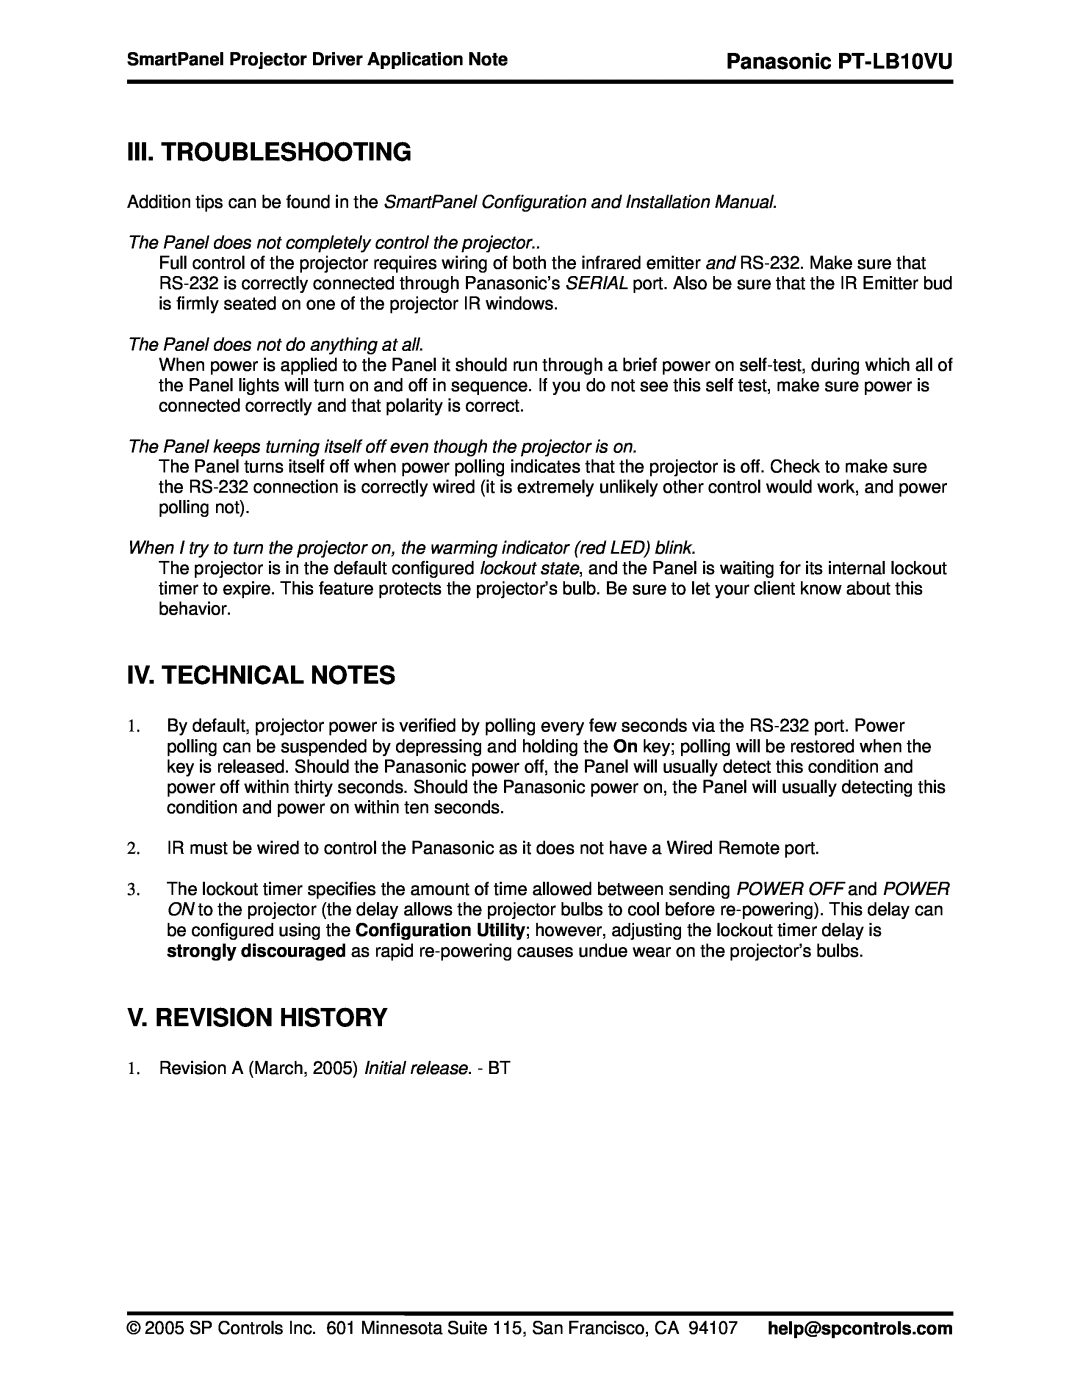 Philips quick start Iii. Troubleshooting, Iv. Technical Notes, V. Revision History, Panasonic PT-LB10VU 